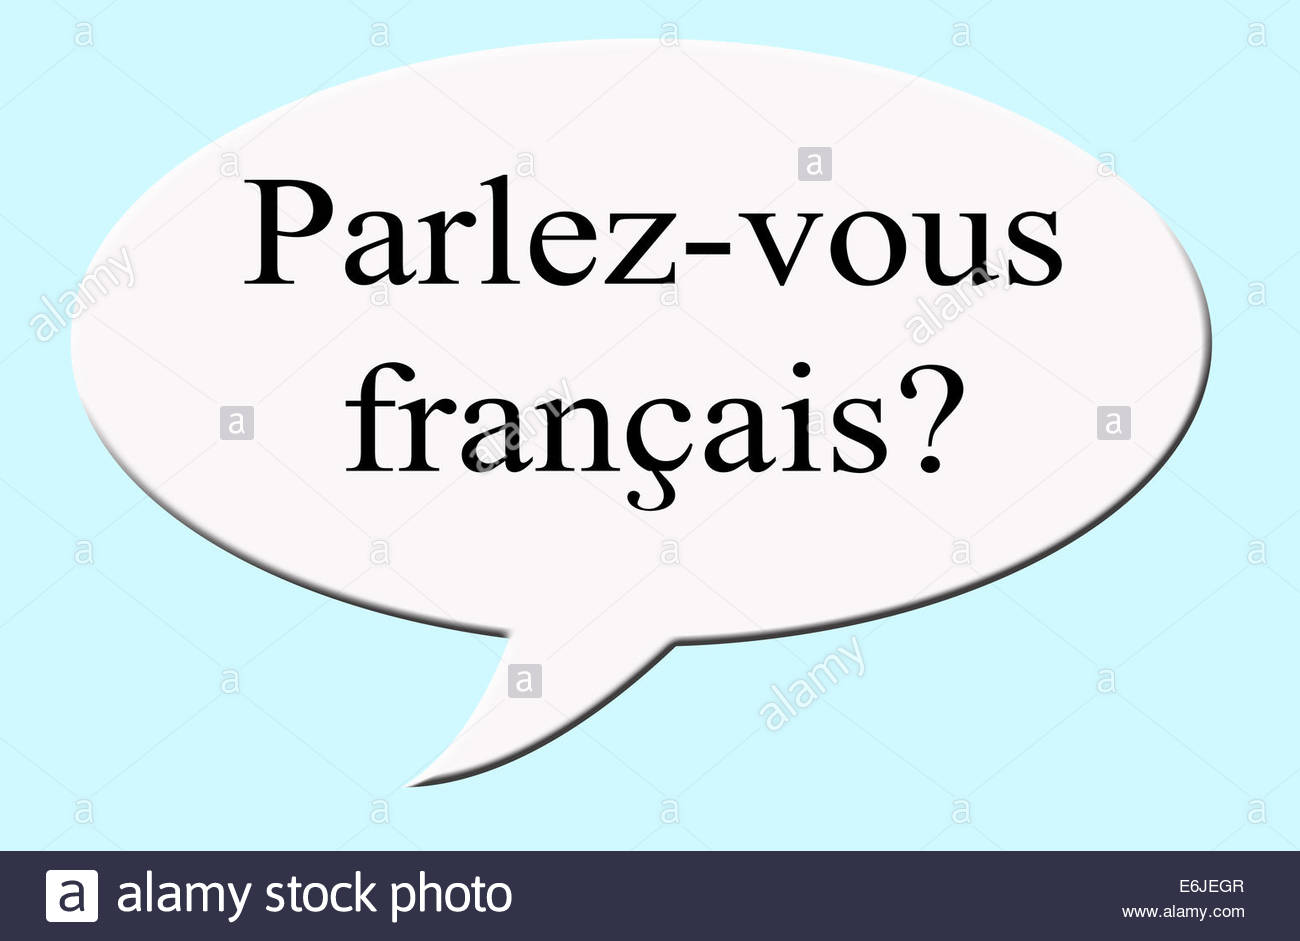 Do you speak french